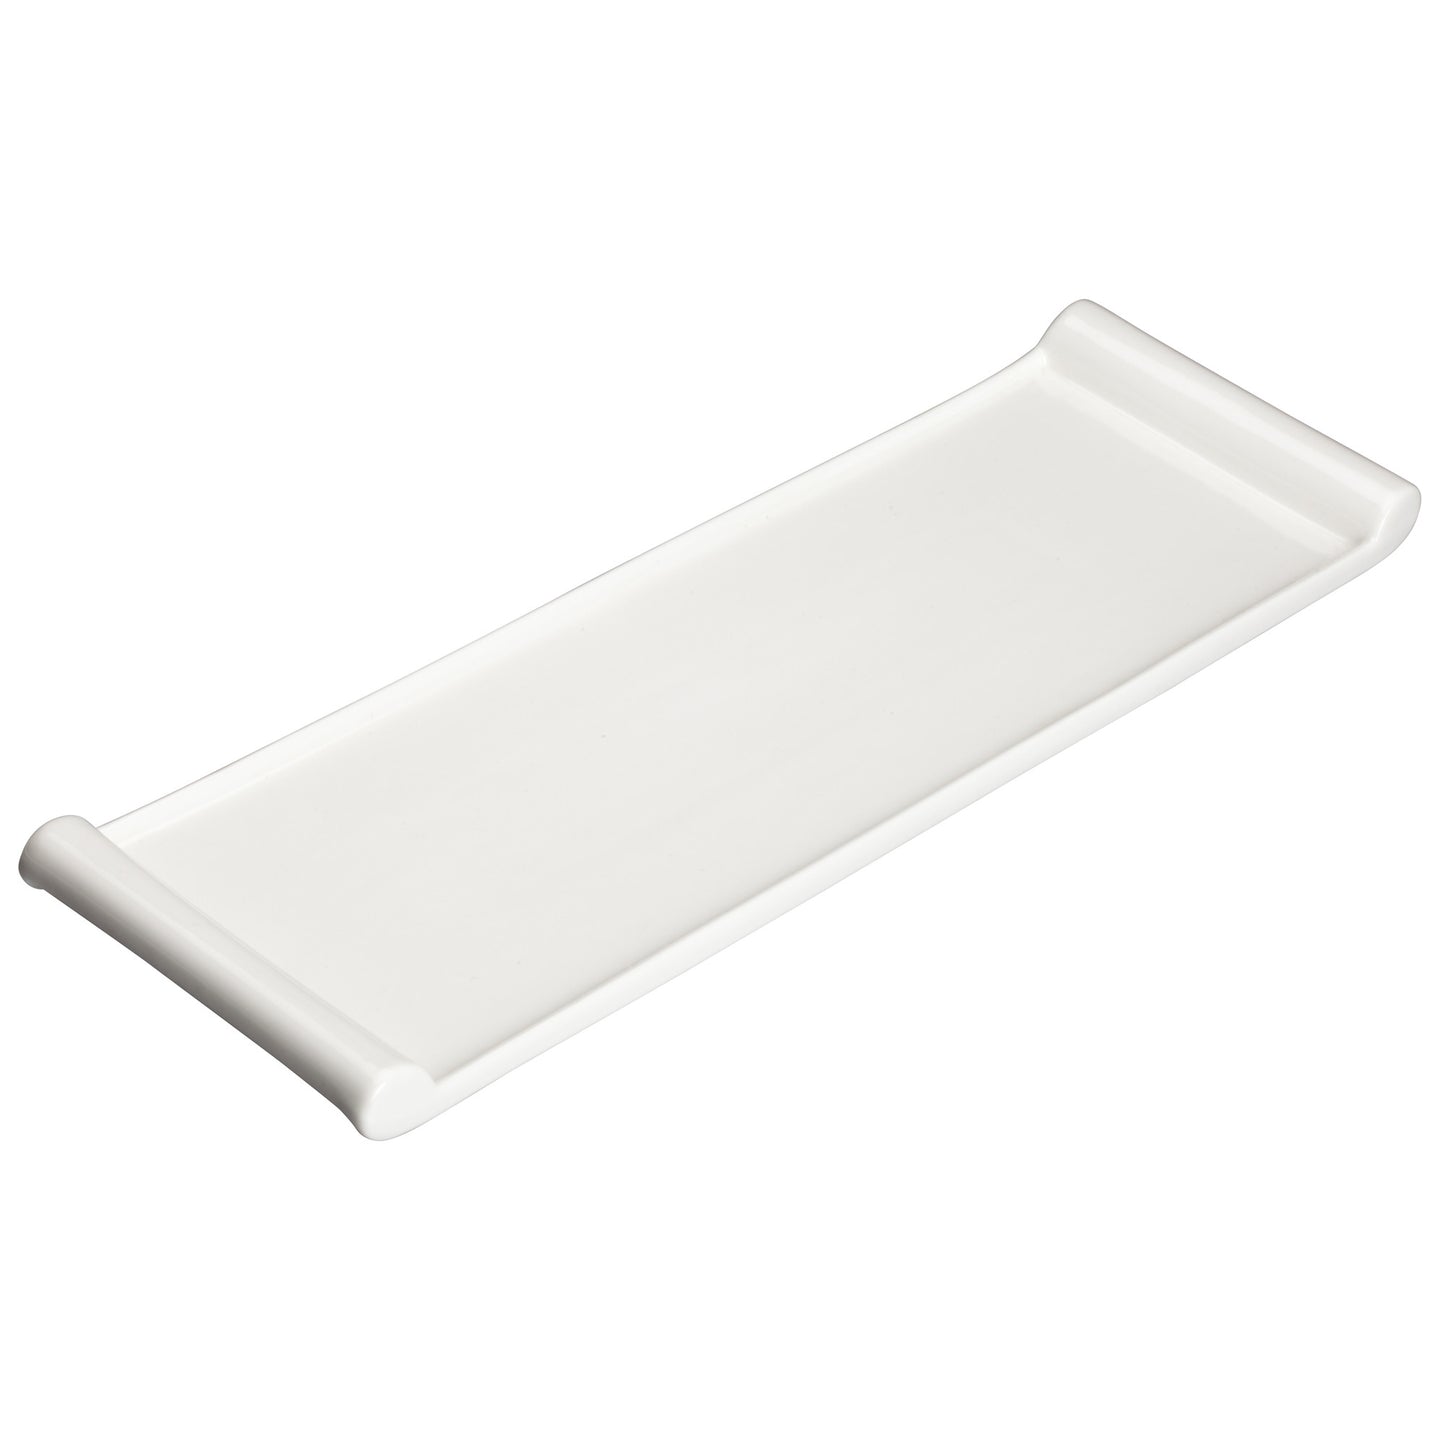 WDP017-116 - 14" x 4-1/2" Porcelain Rectangular Platter, Bright White, 24 pcs/case